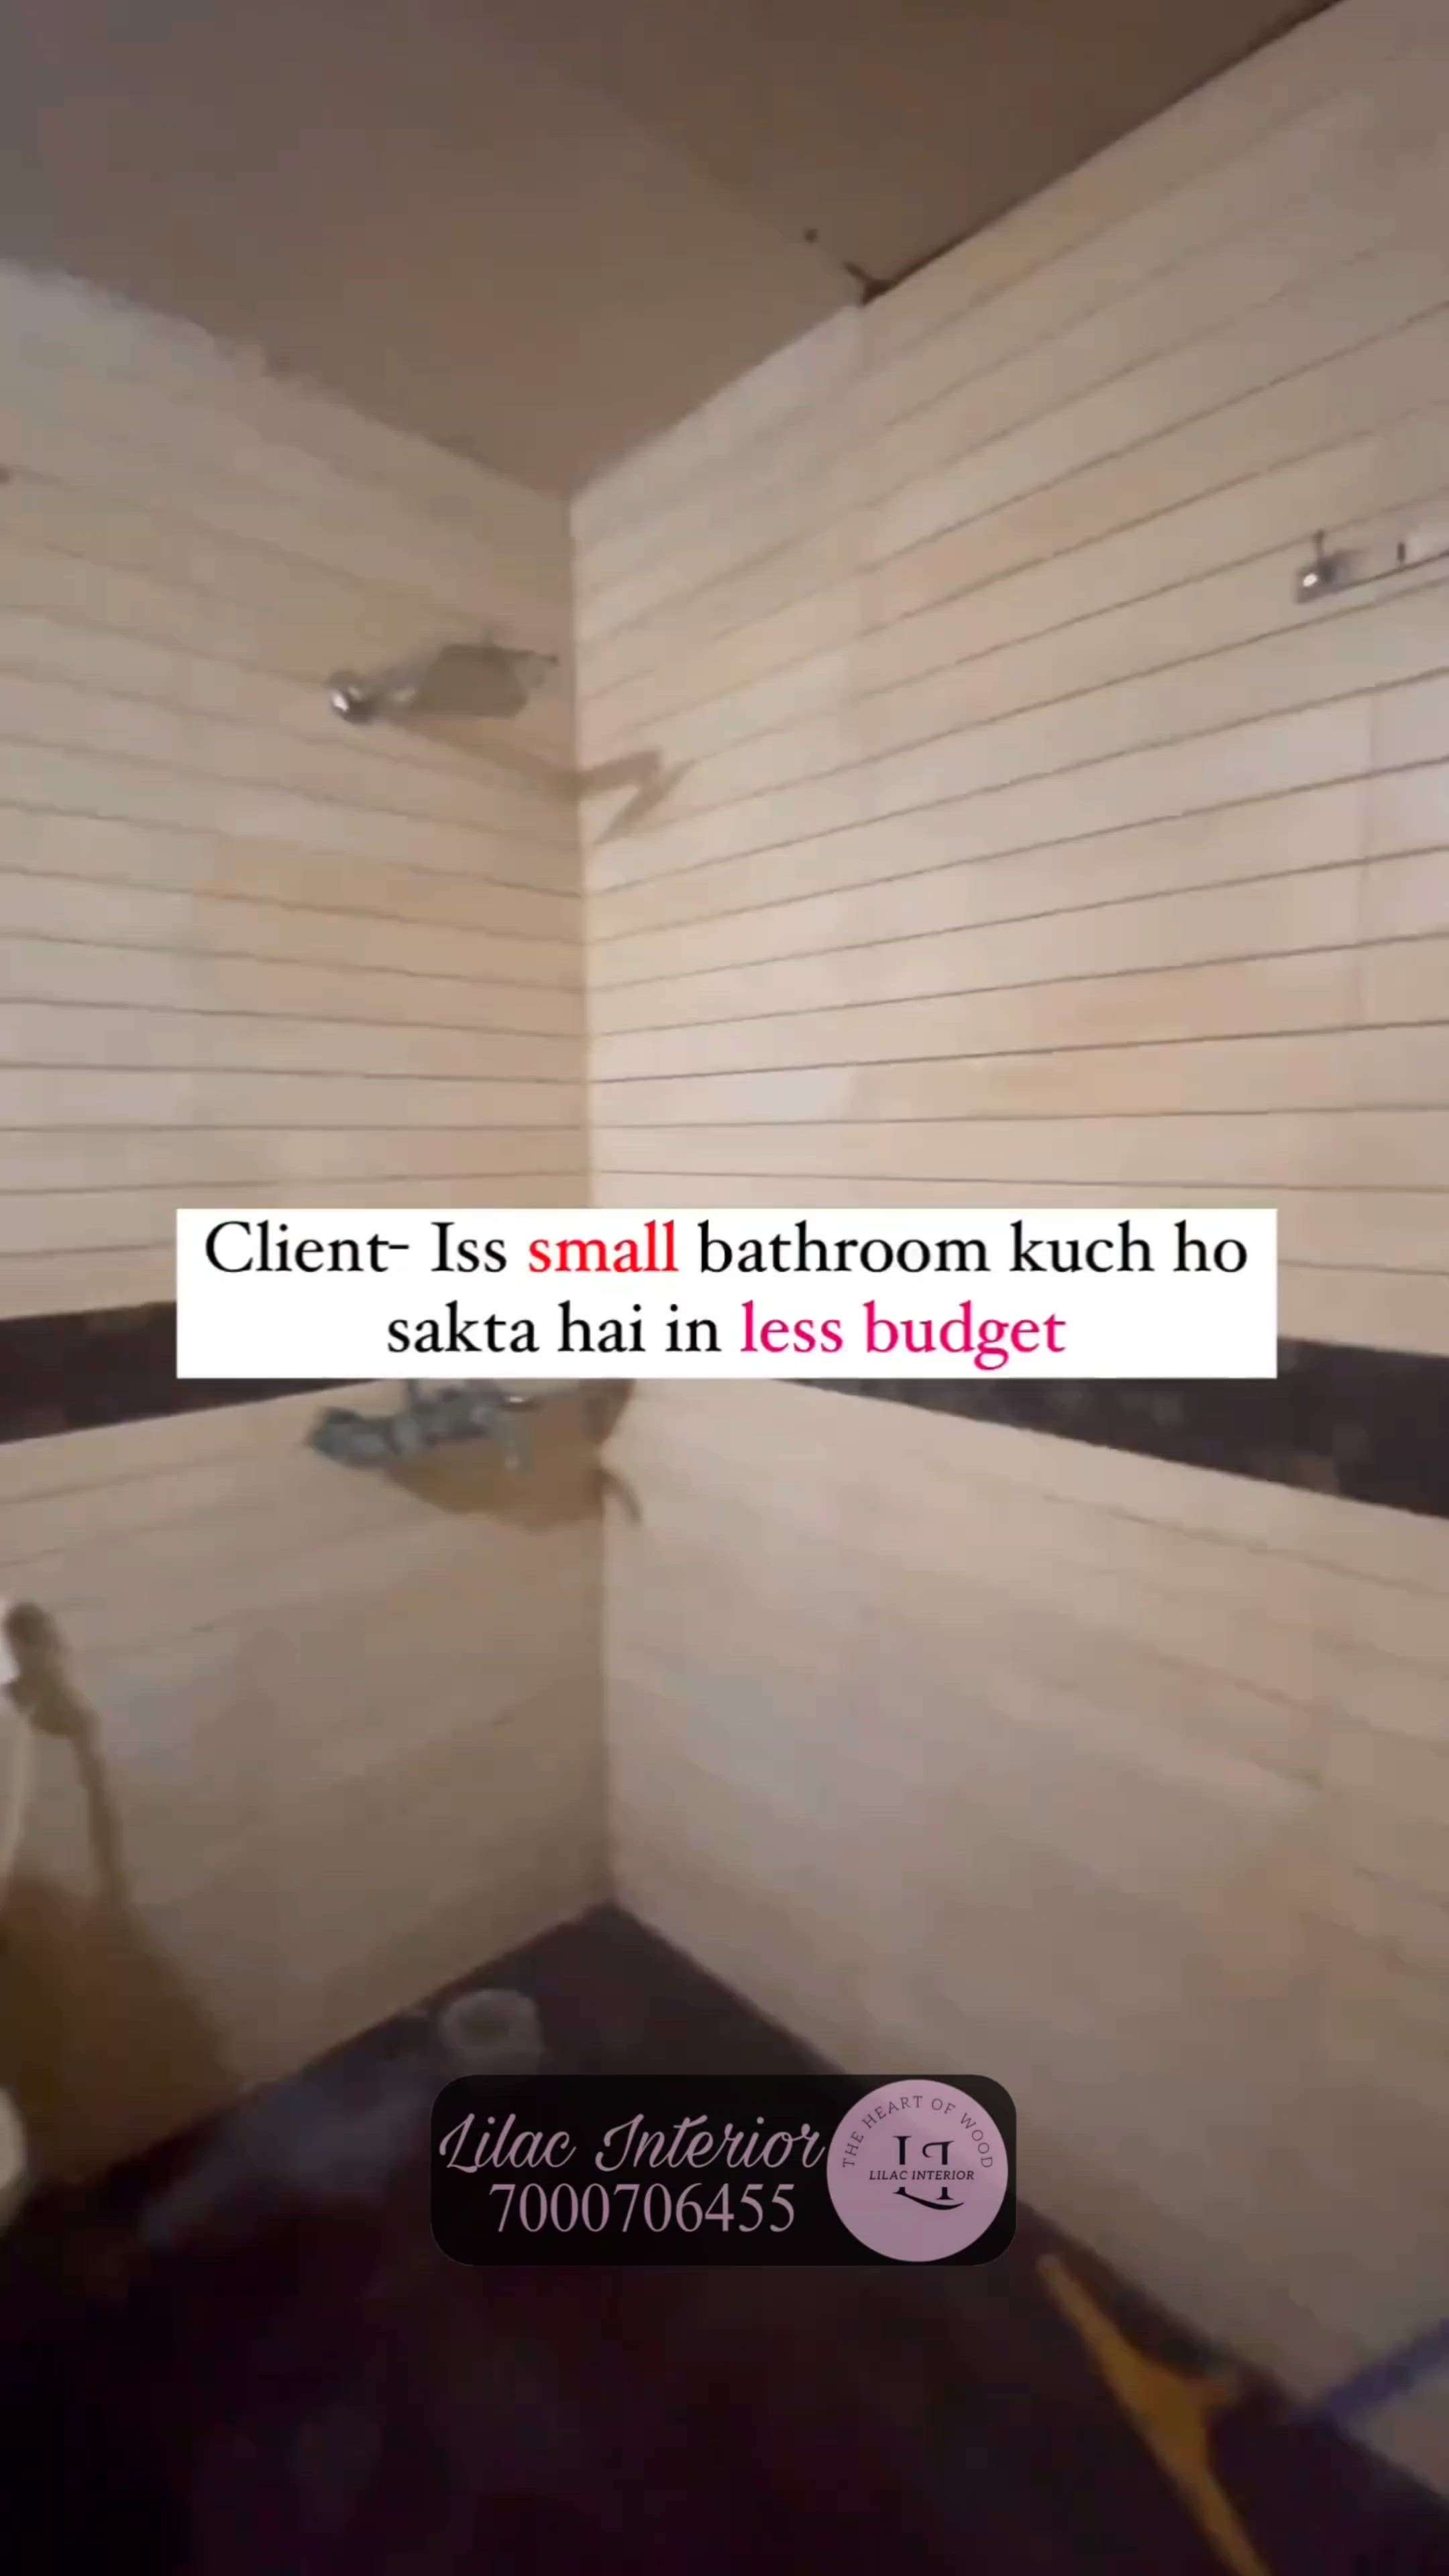 Bathroom renovation by Lilac Interior 🤩
.
.
#bathroominterior #bathroomcabinets #bathroomideas #bathtub #glasspartition #washroom #washroomdecor #modernbathroomdesign #wetwashroom #glassbathroom #viralreels #viralvideos #koloapp #koloncr  #koloapp  #kolopost  #koloamaterials  #koloapl